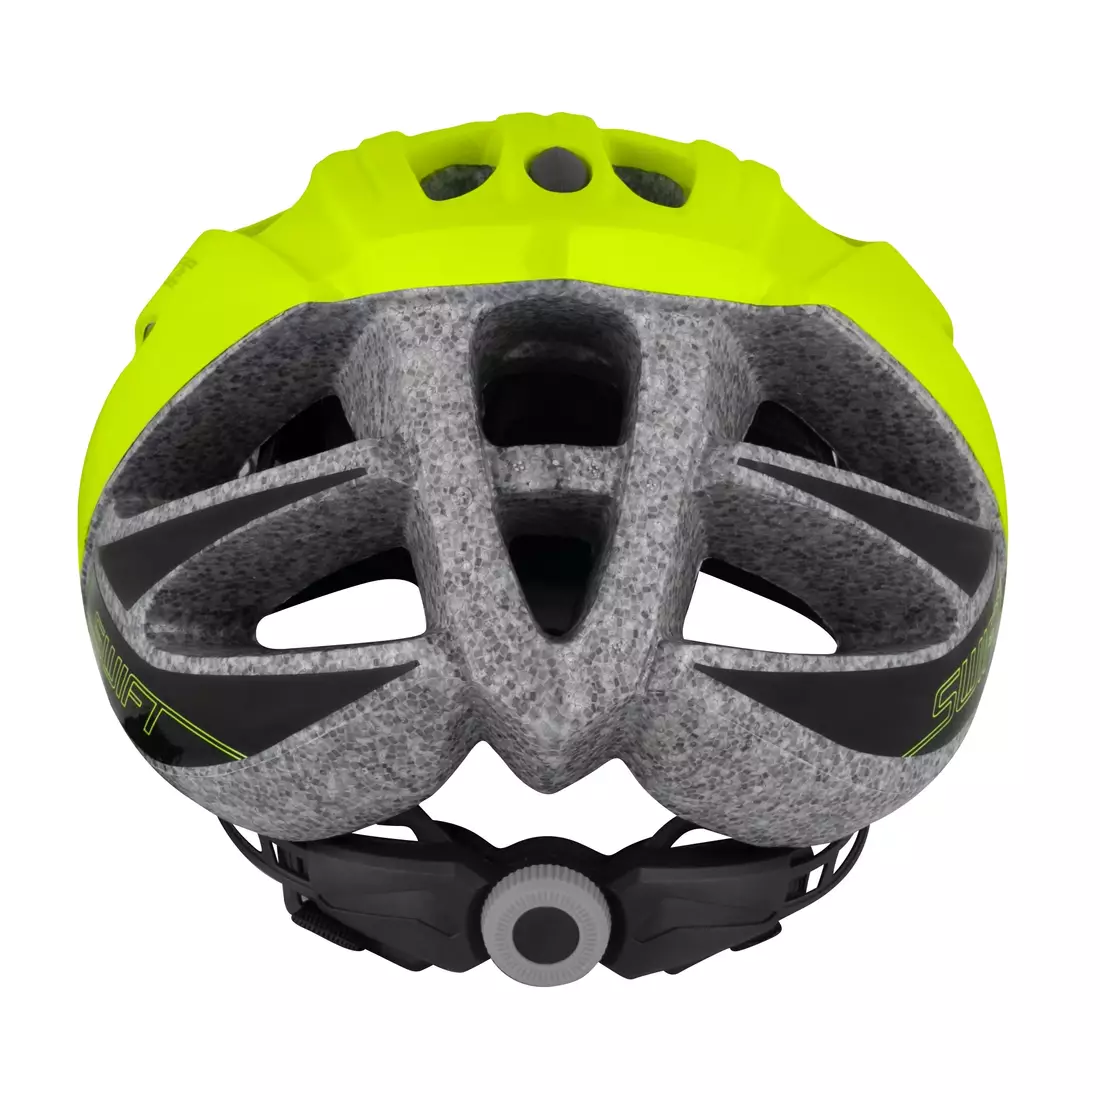 FORCE SWIFT Bicycle helmet fluo 902896